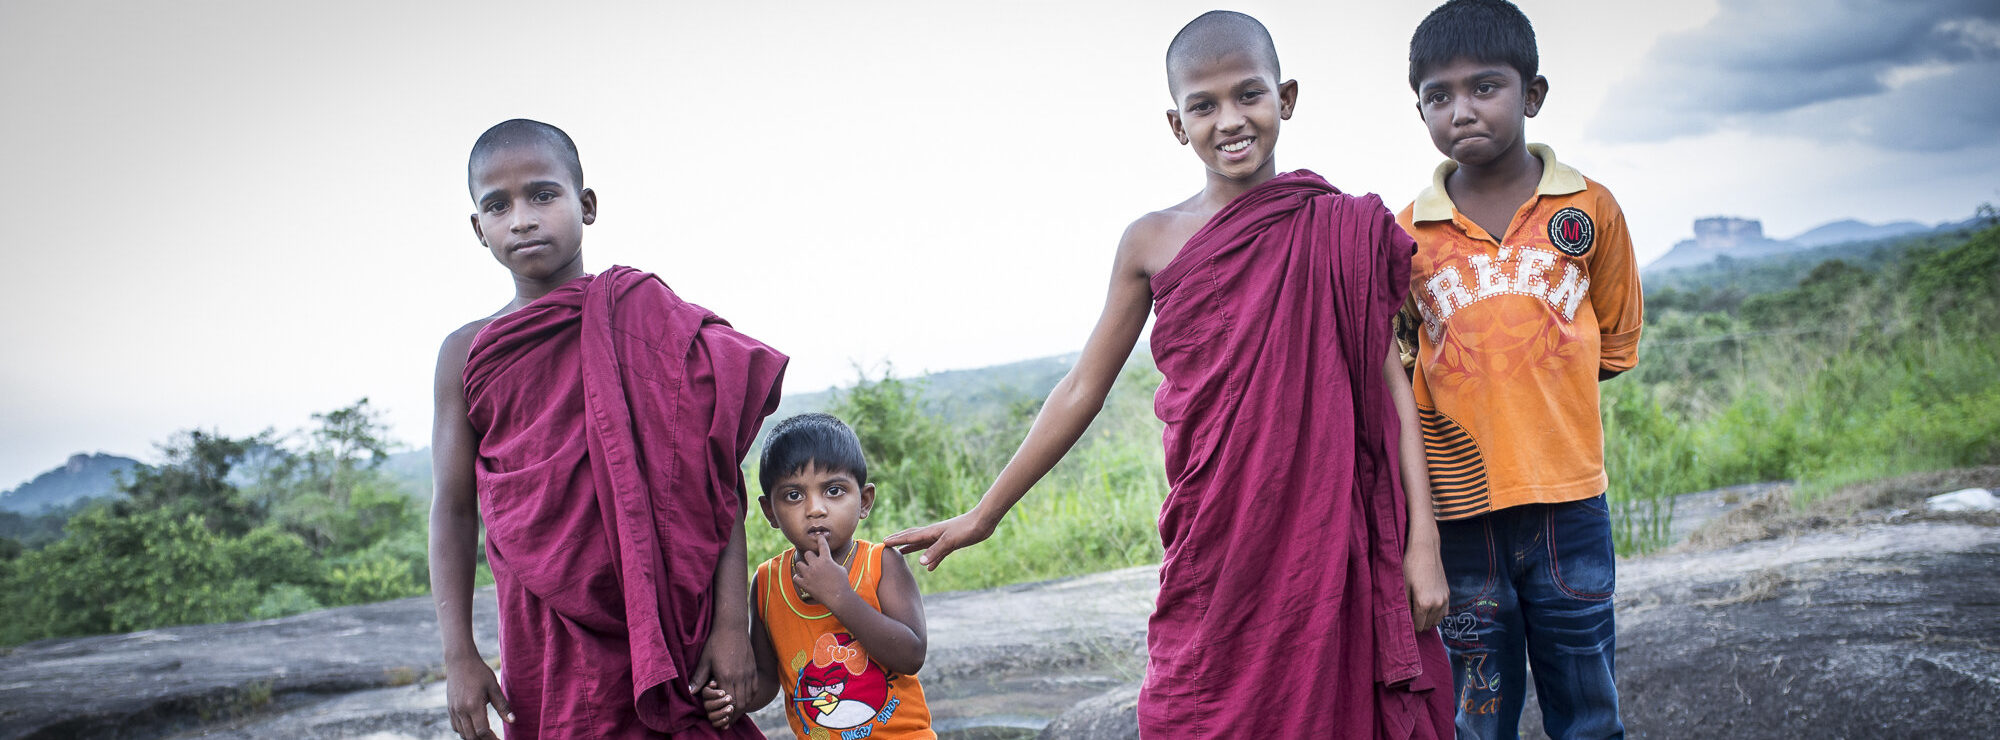 TDS Voyage - Enfants moines dans la brousse - Sigiriya (Sri Lanka)